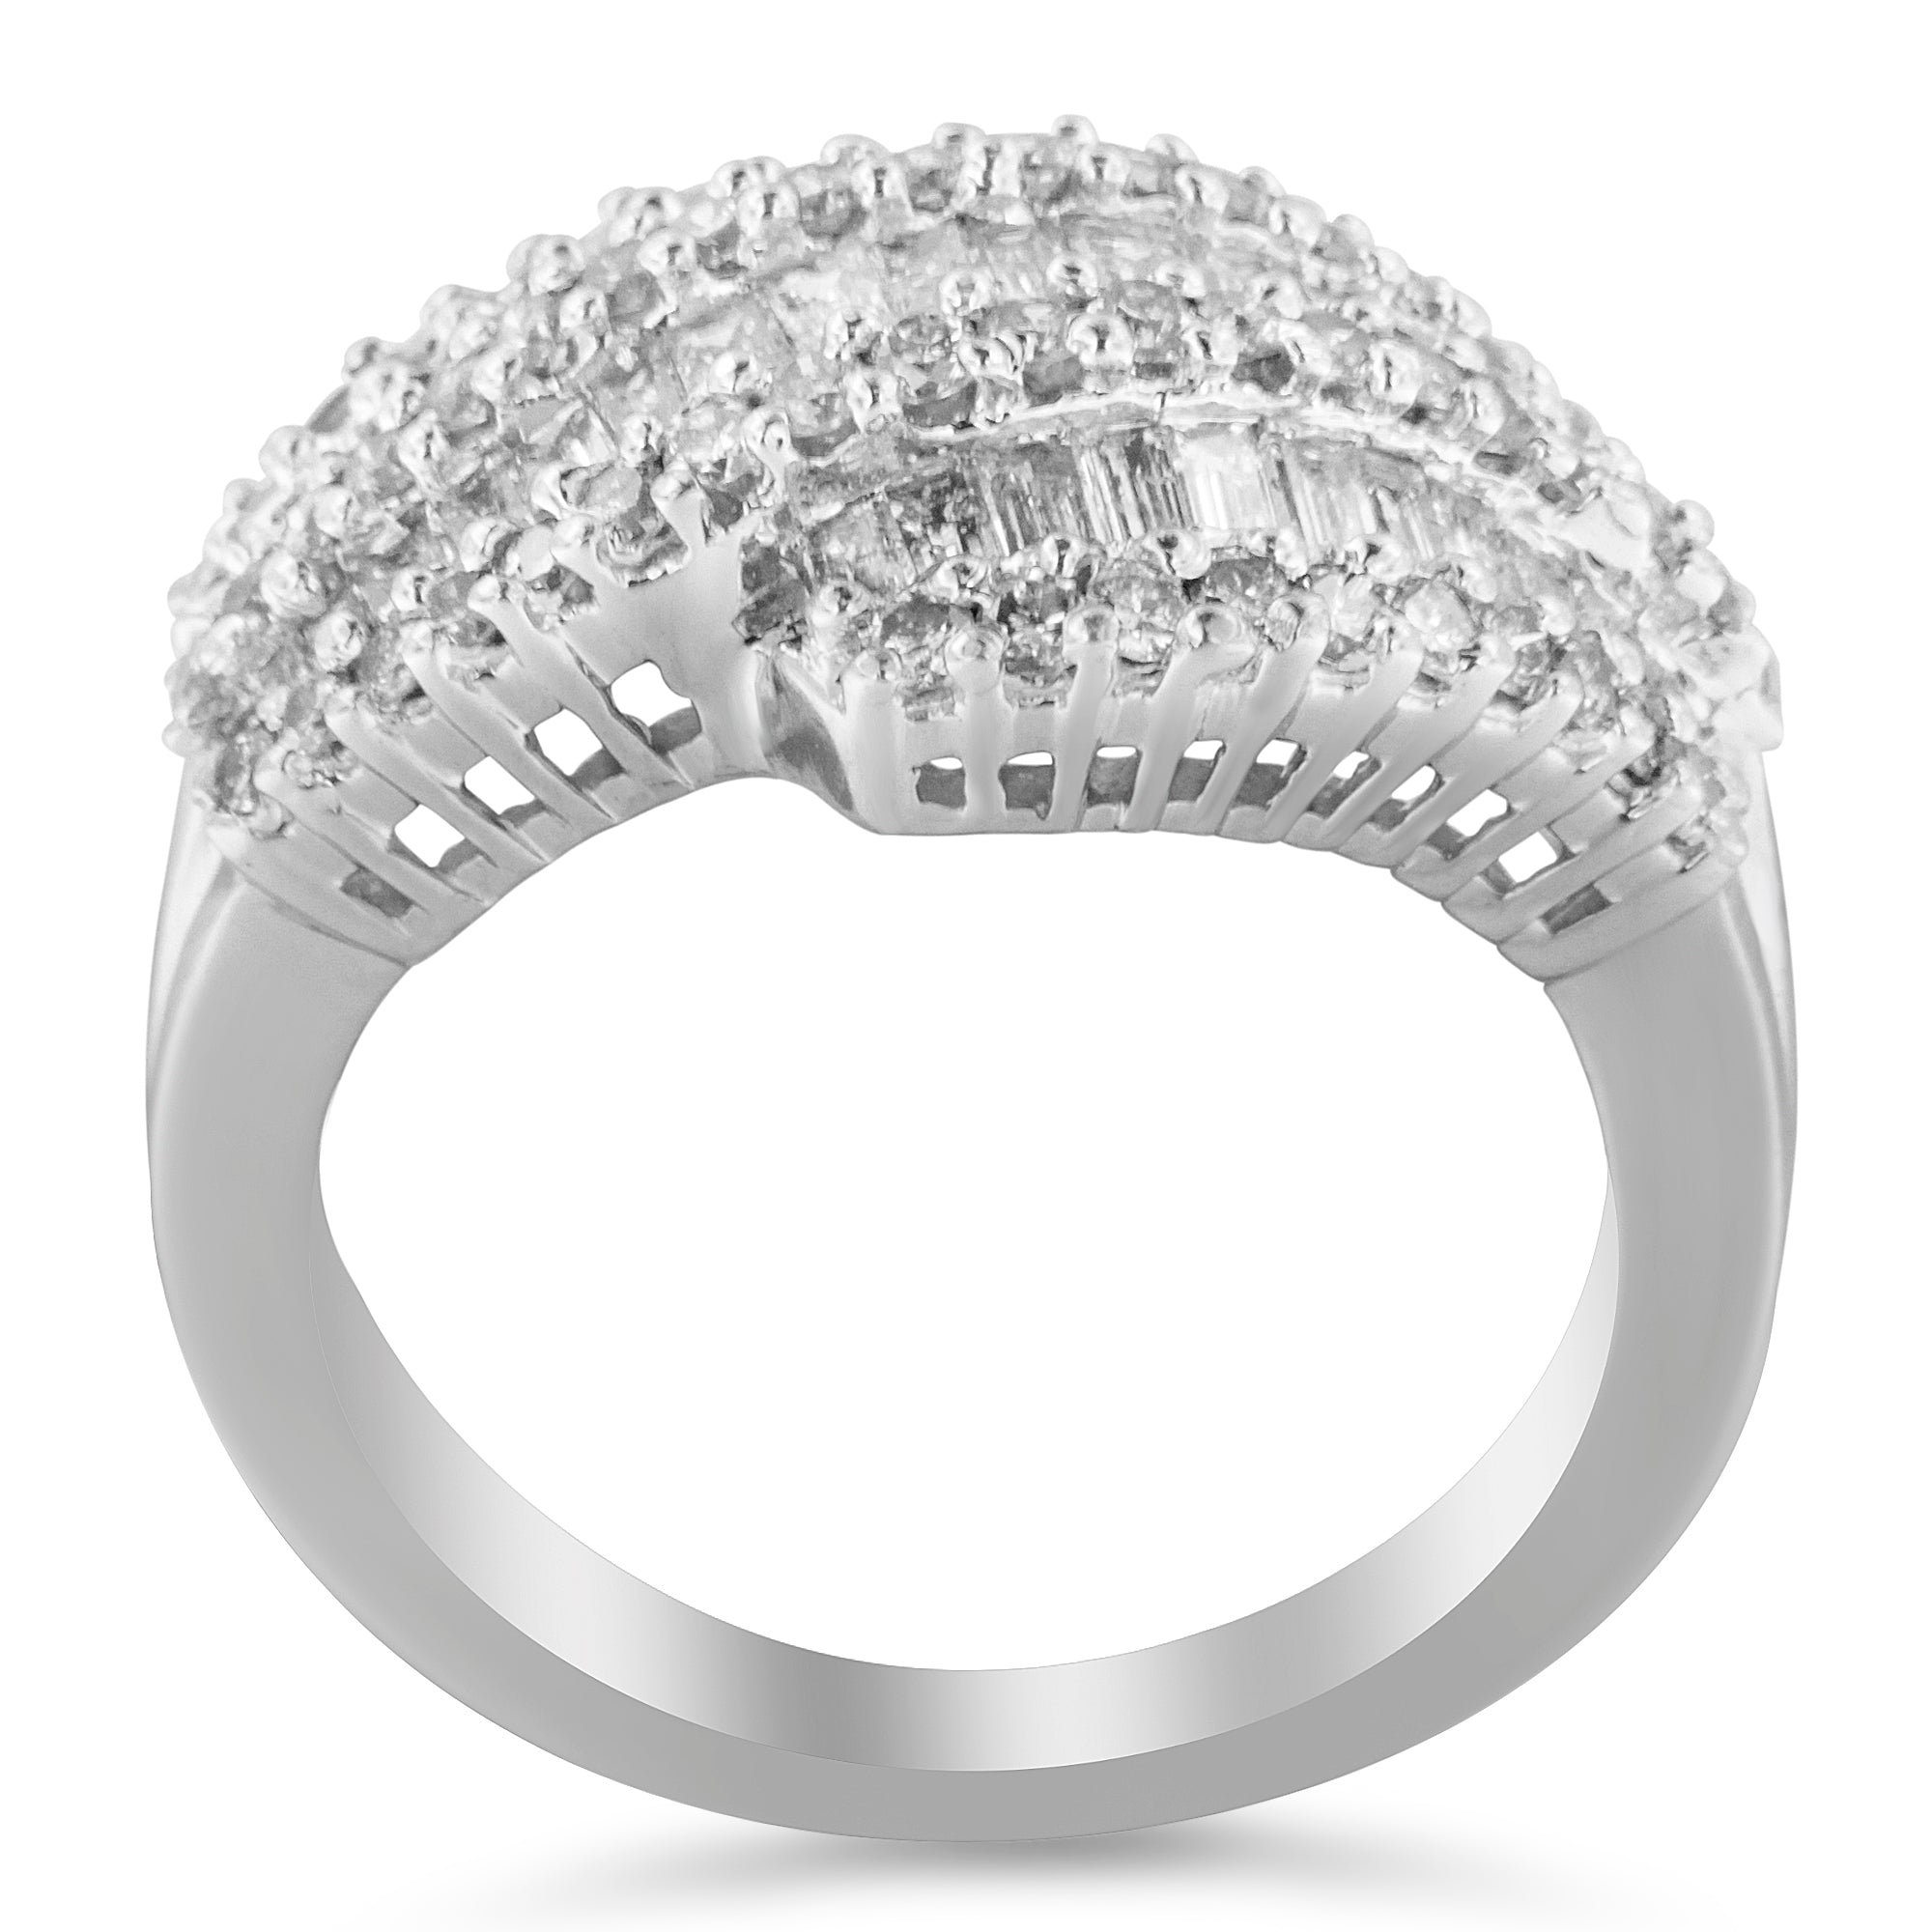 14K White Gold Diamond Cocktail Ring Band - Size 6-1/2